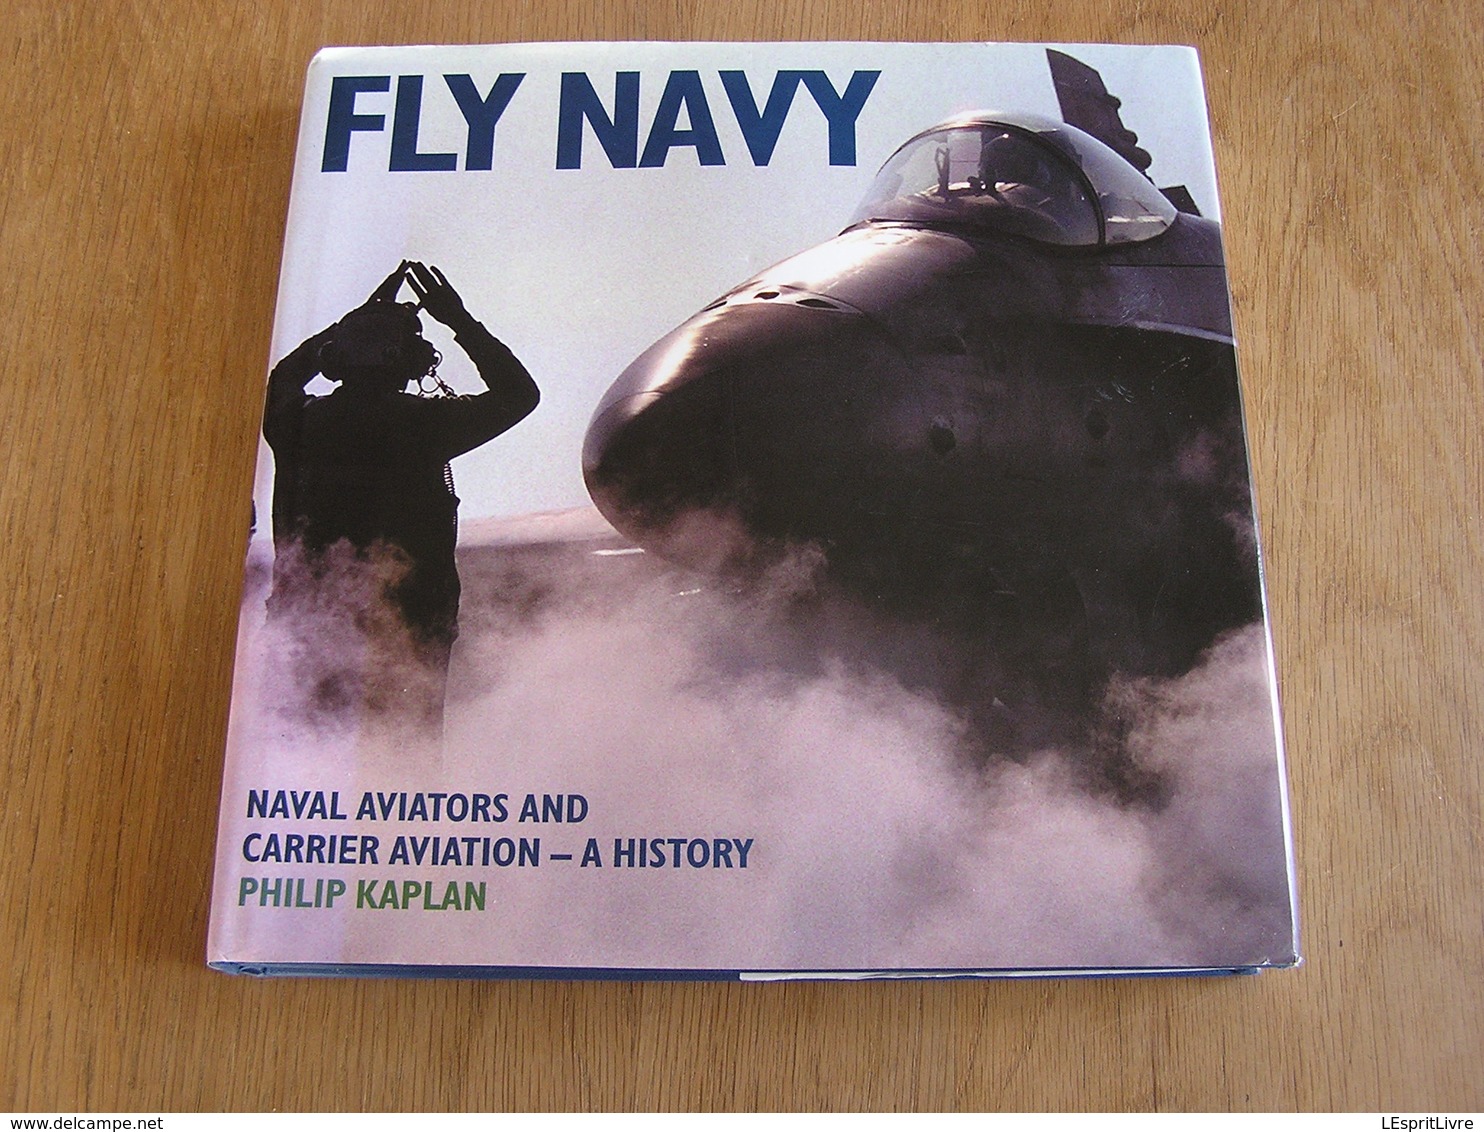 FLY NAVY Story Aviation Avion Aircraft Guerre 40 45 USAF Korea Vietnam World War 2 Carrier Pearl Harbor Naval Aviators - Guerres Impliquant US